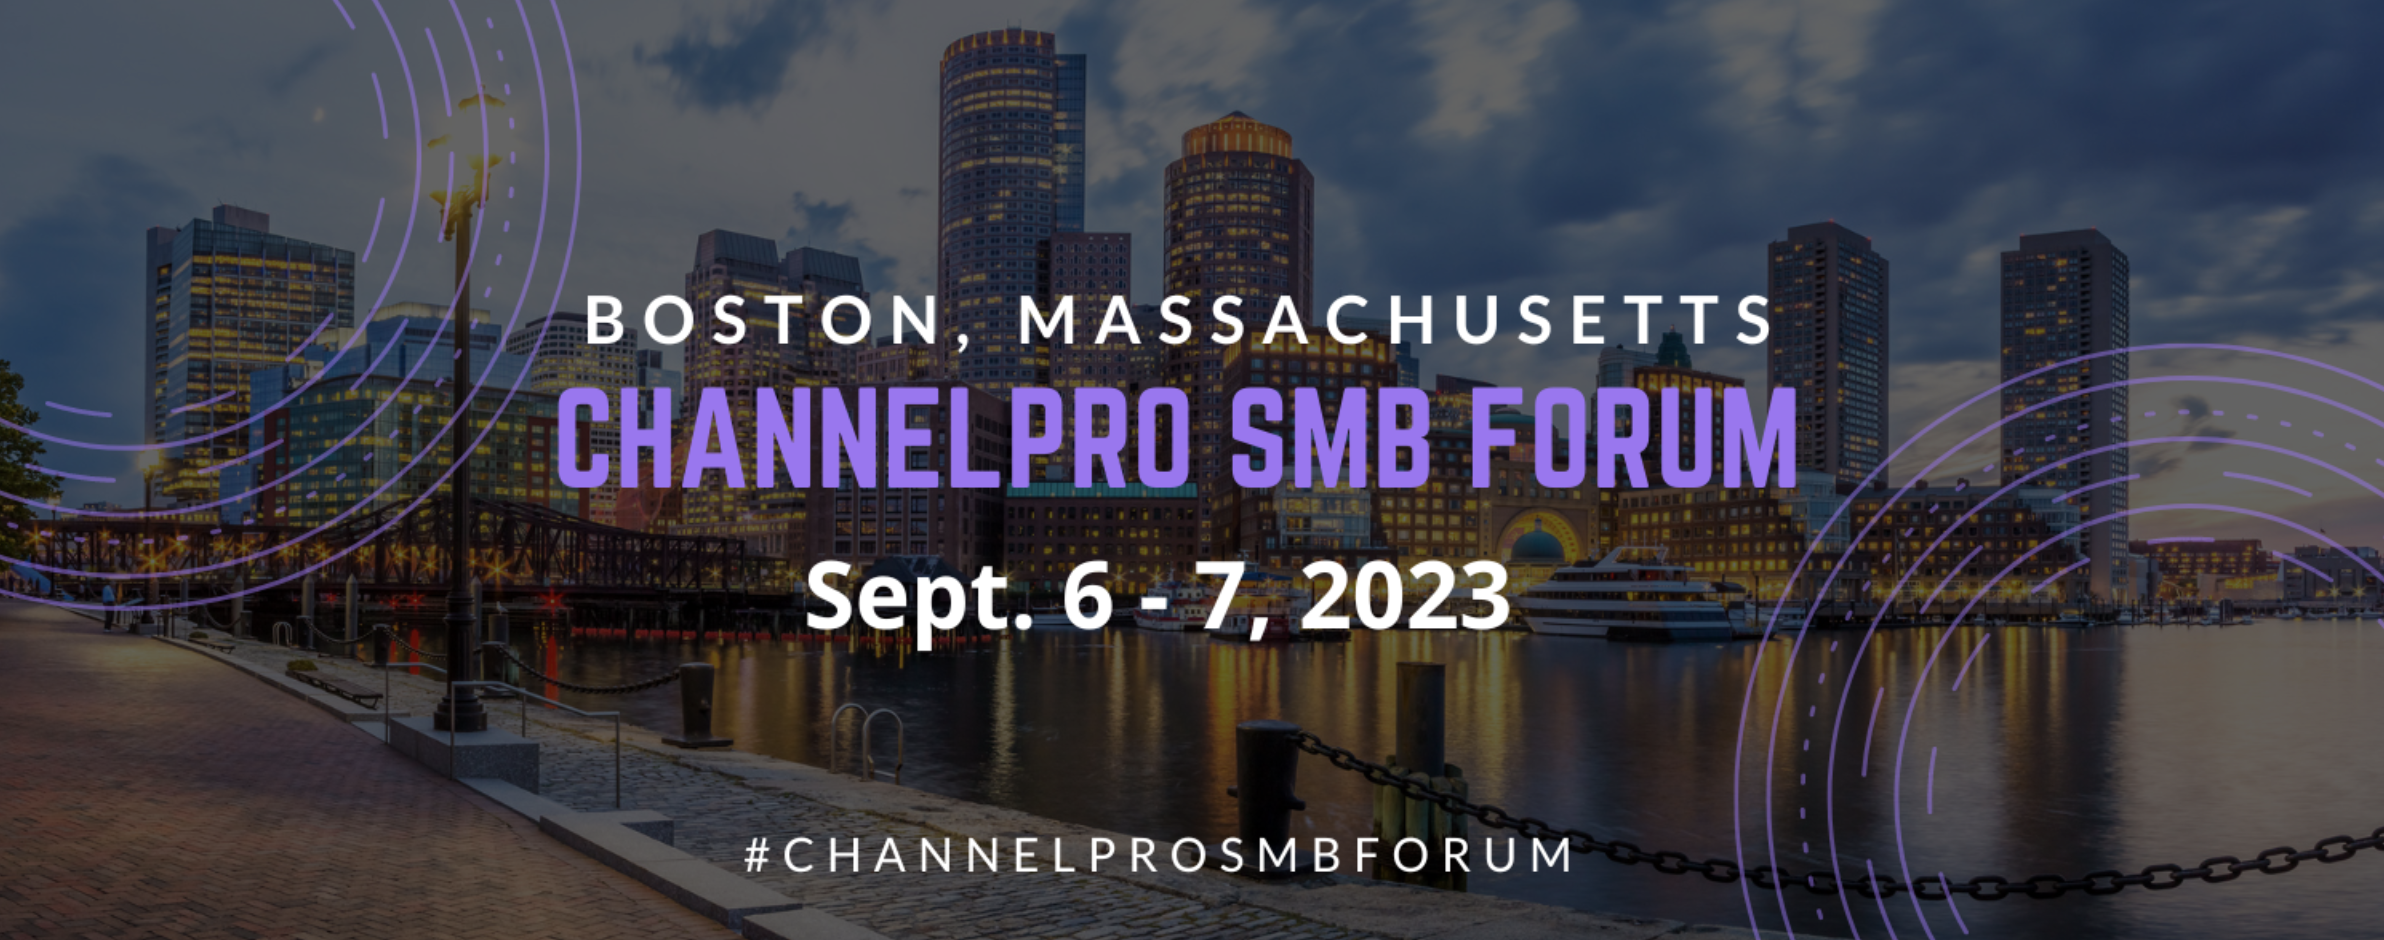 ChannelPro SMB Forum - Boston